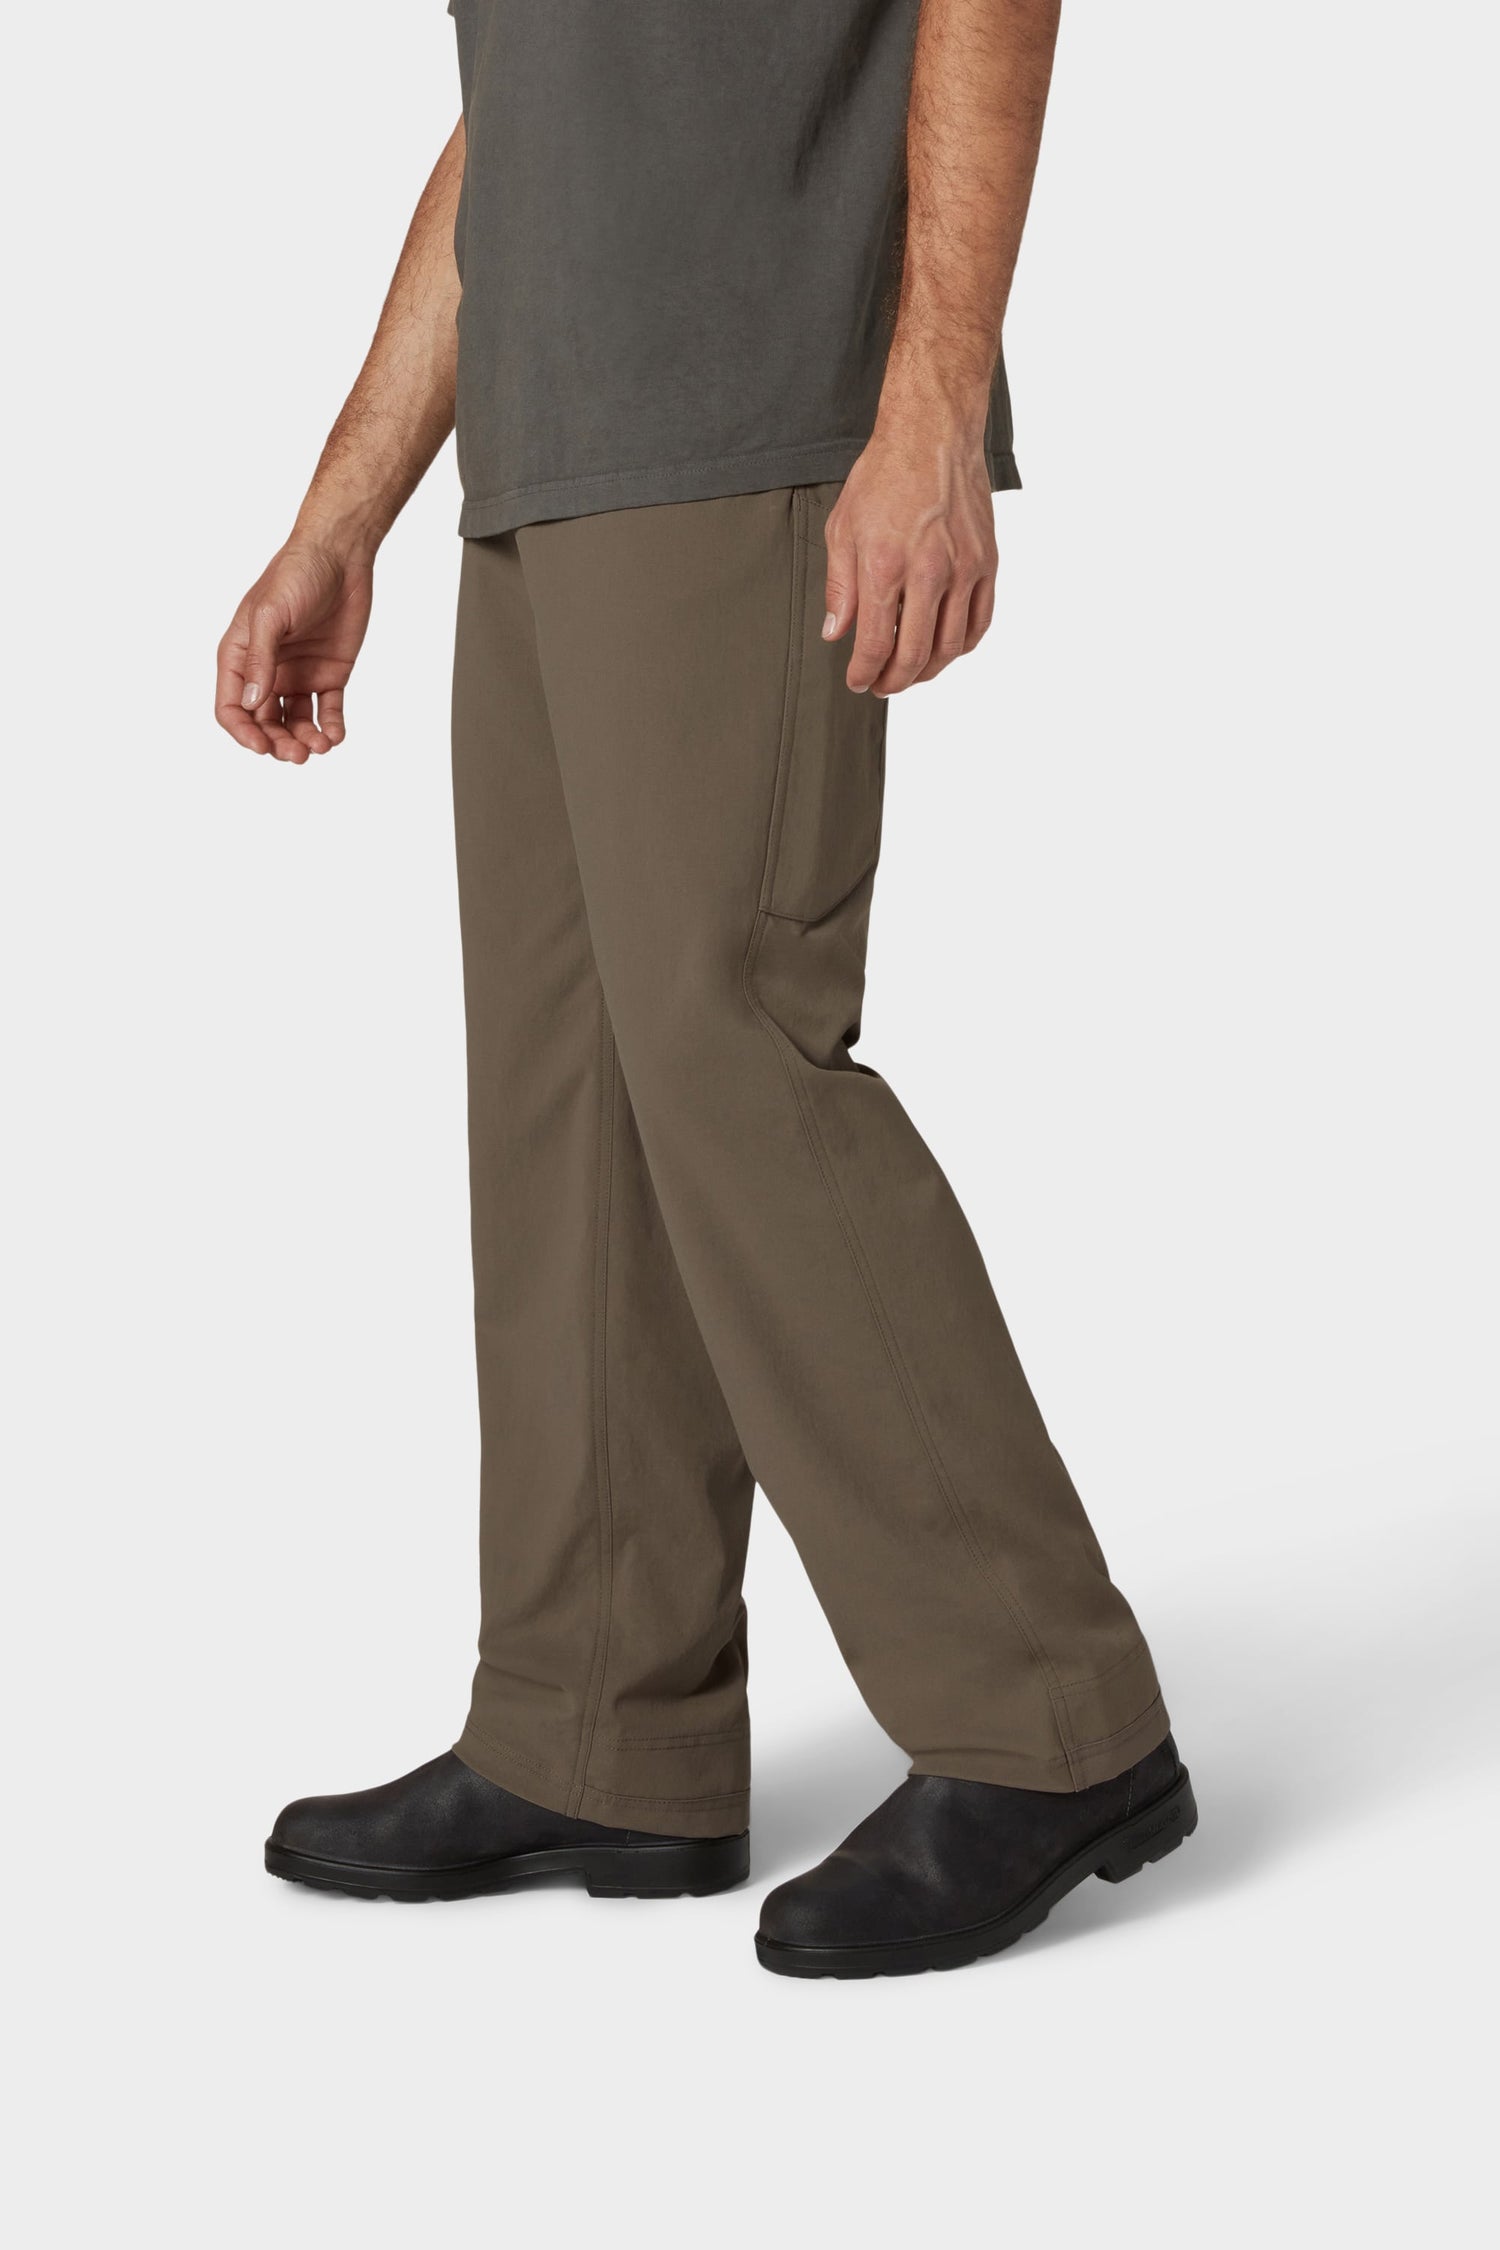 MSJUHEG Flare Leggings Cargo Pants Mens Solid Color Pocket Suit Pant Bell  Bottoms Pants Cargo Pants For Men Army Green L